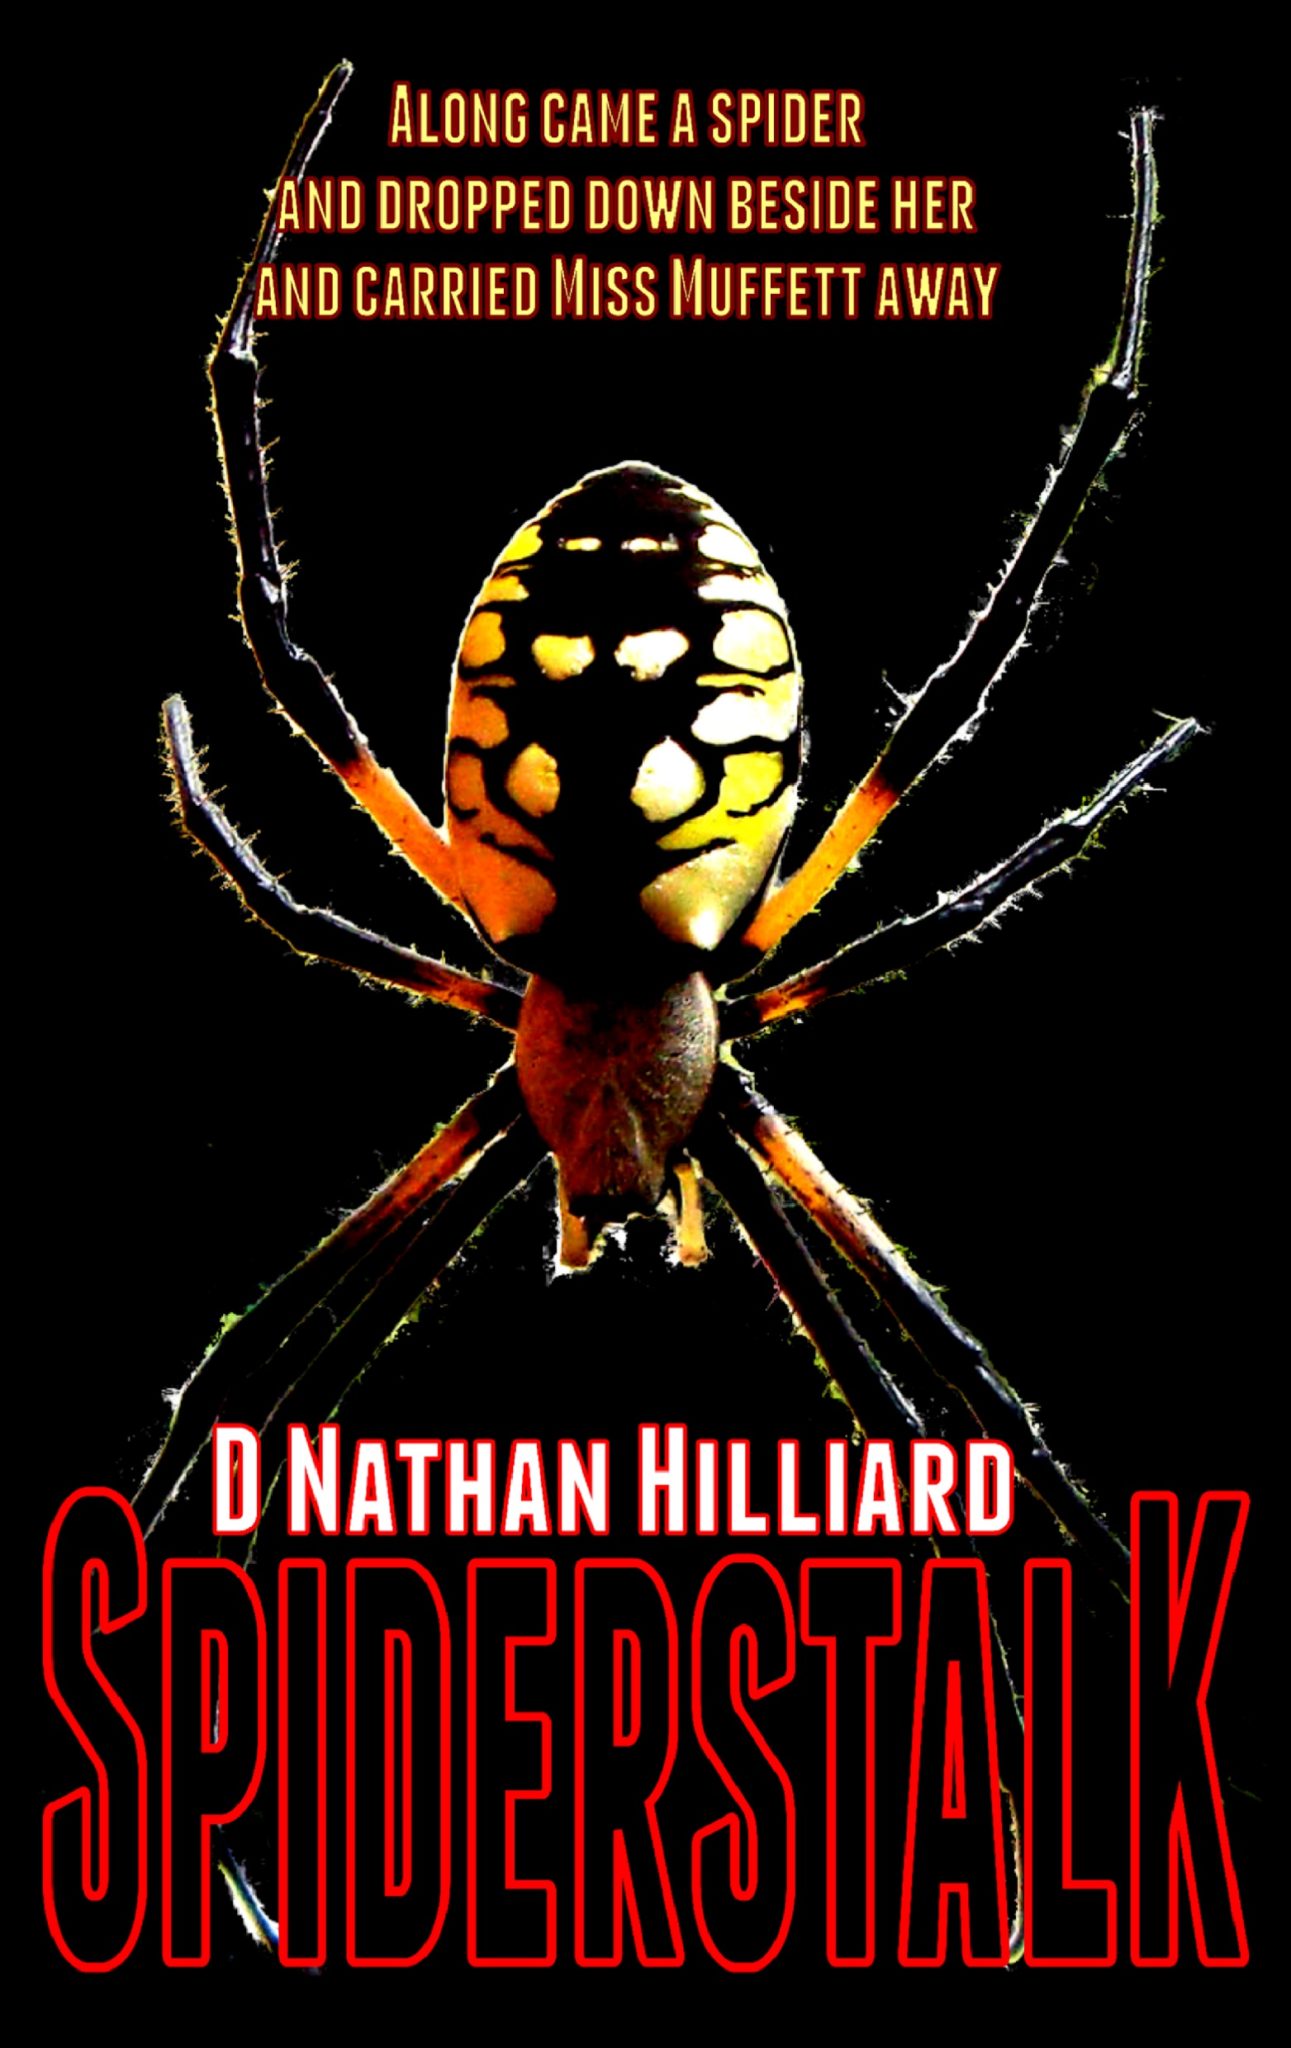 FREE: Spiderstalk by D. Nathan Hilliard